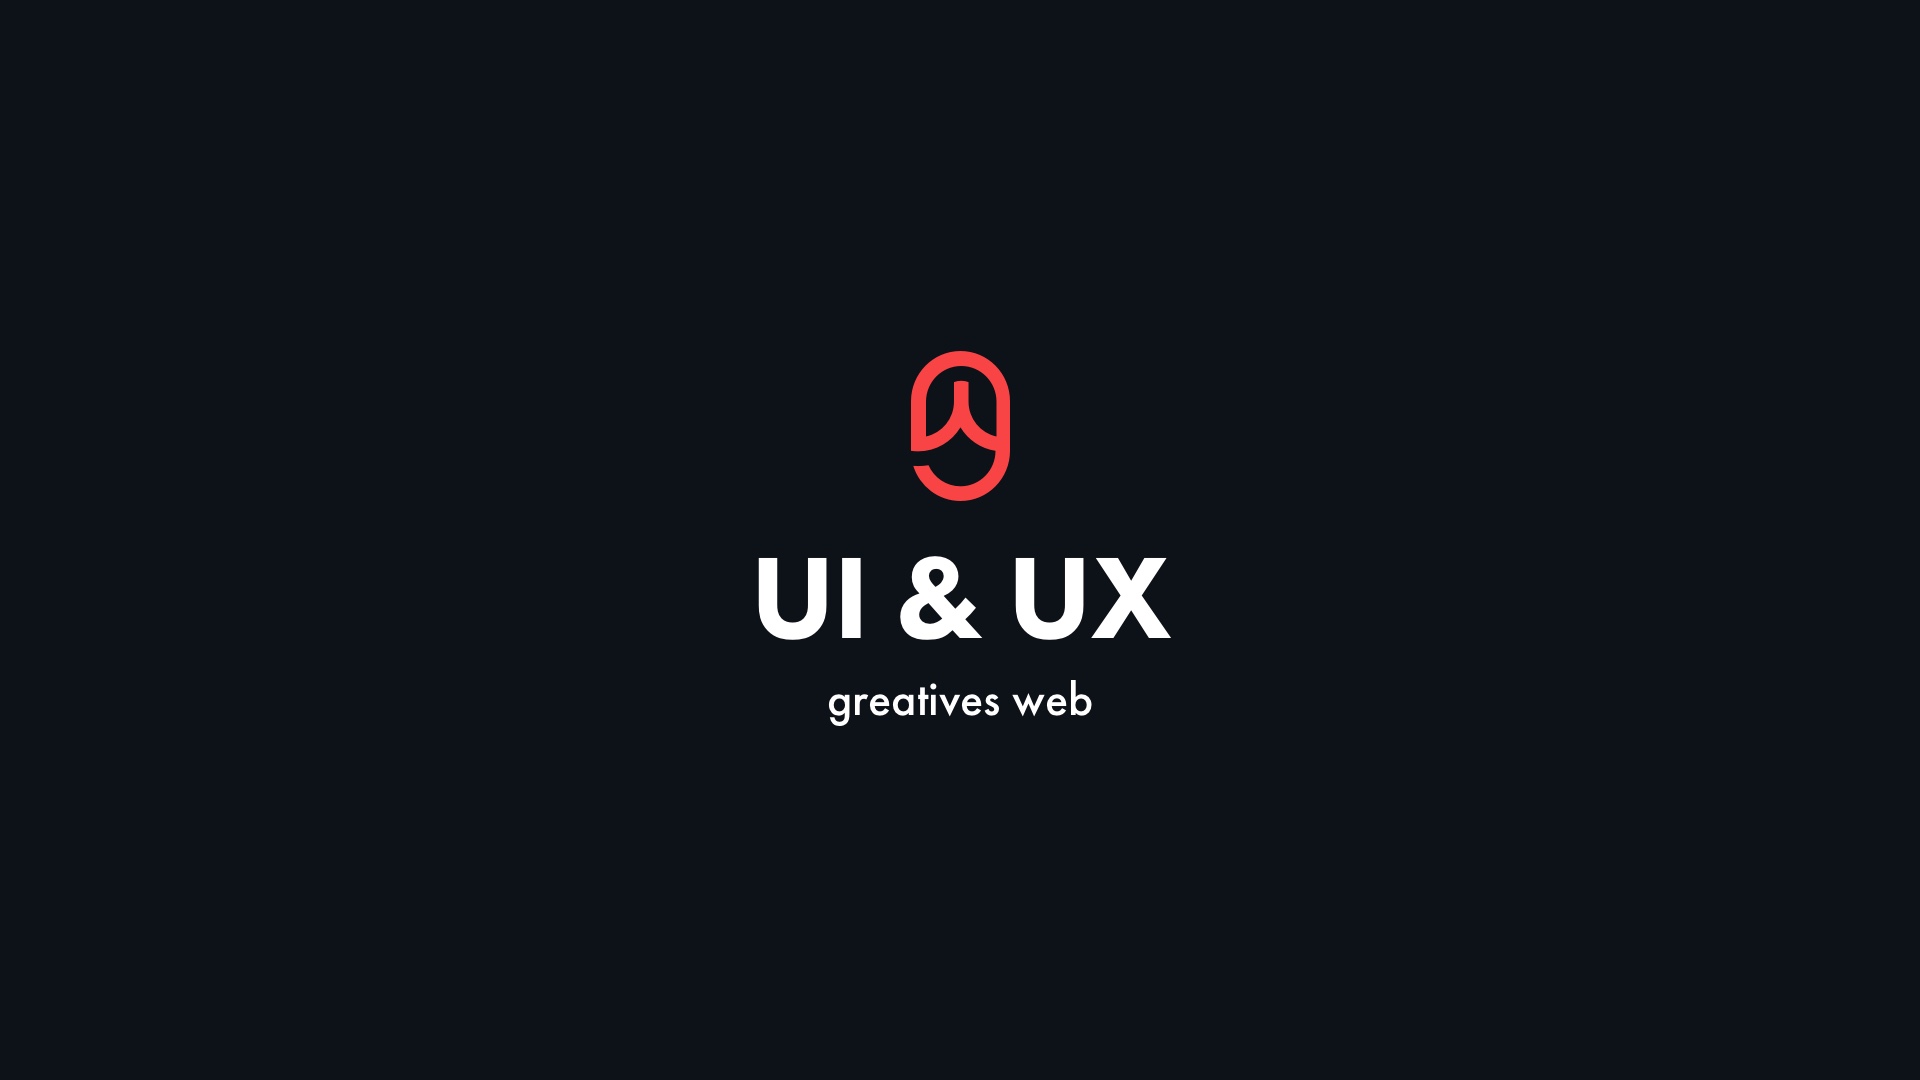 UI & UX Web Design, User Experience